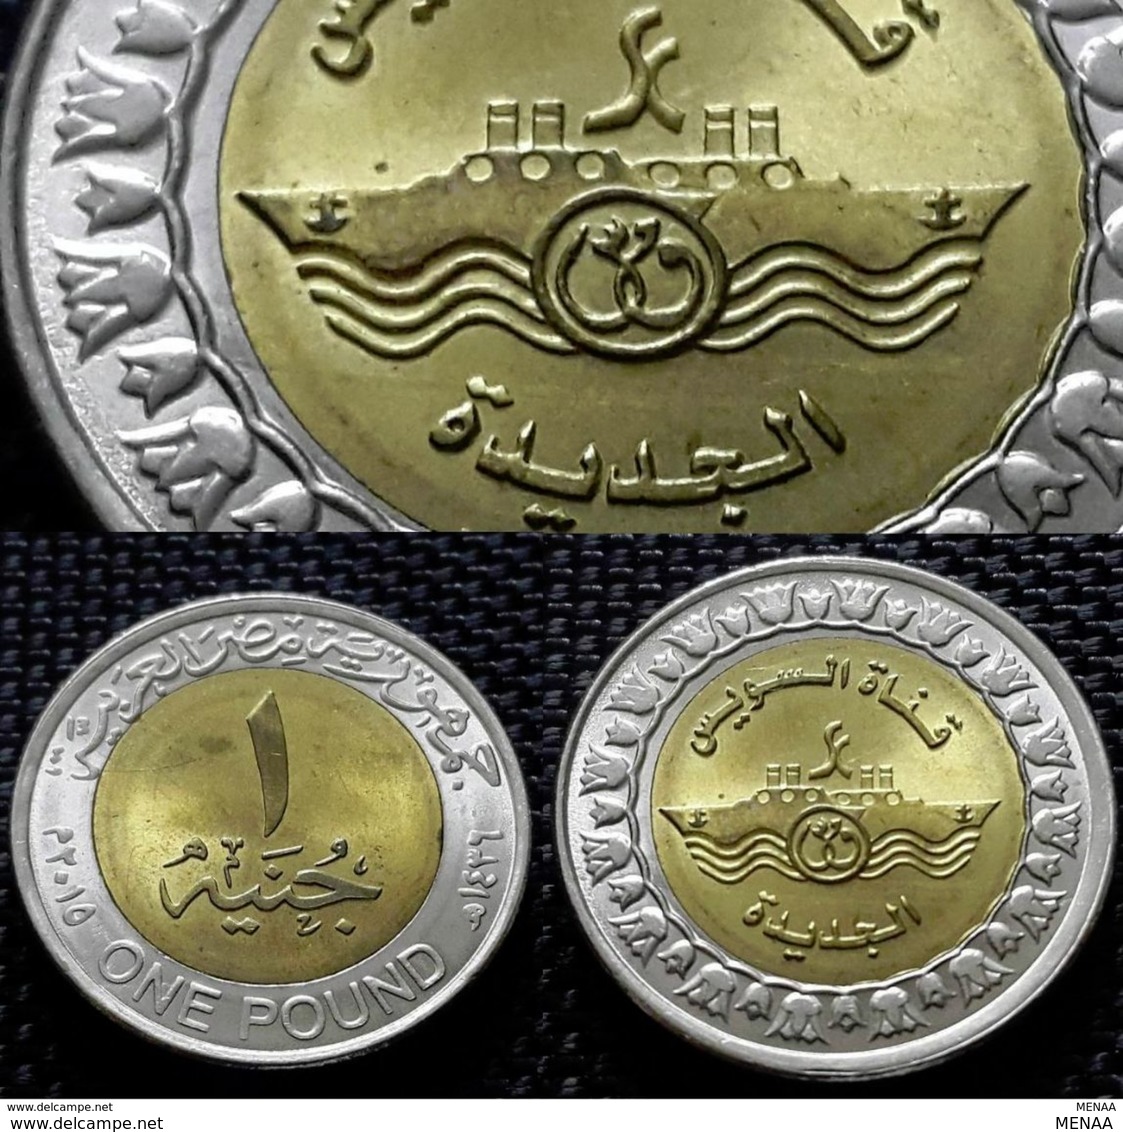 Egypt - 1 Pound - 2015 - New Branch Of Suez Chanel -KM 1001 - UNC - Egipto